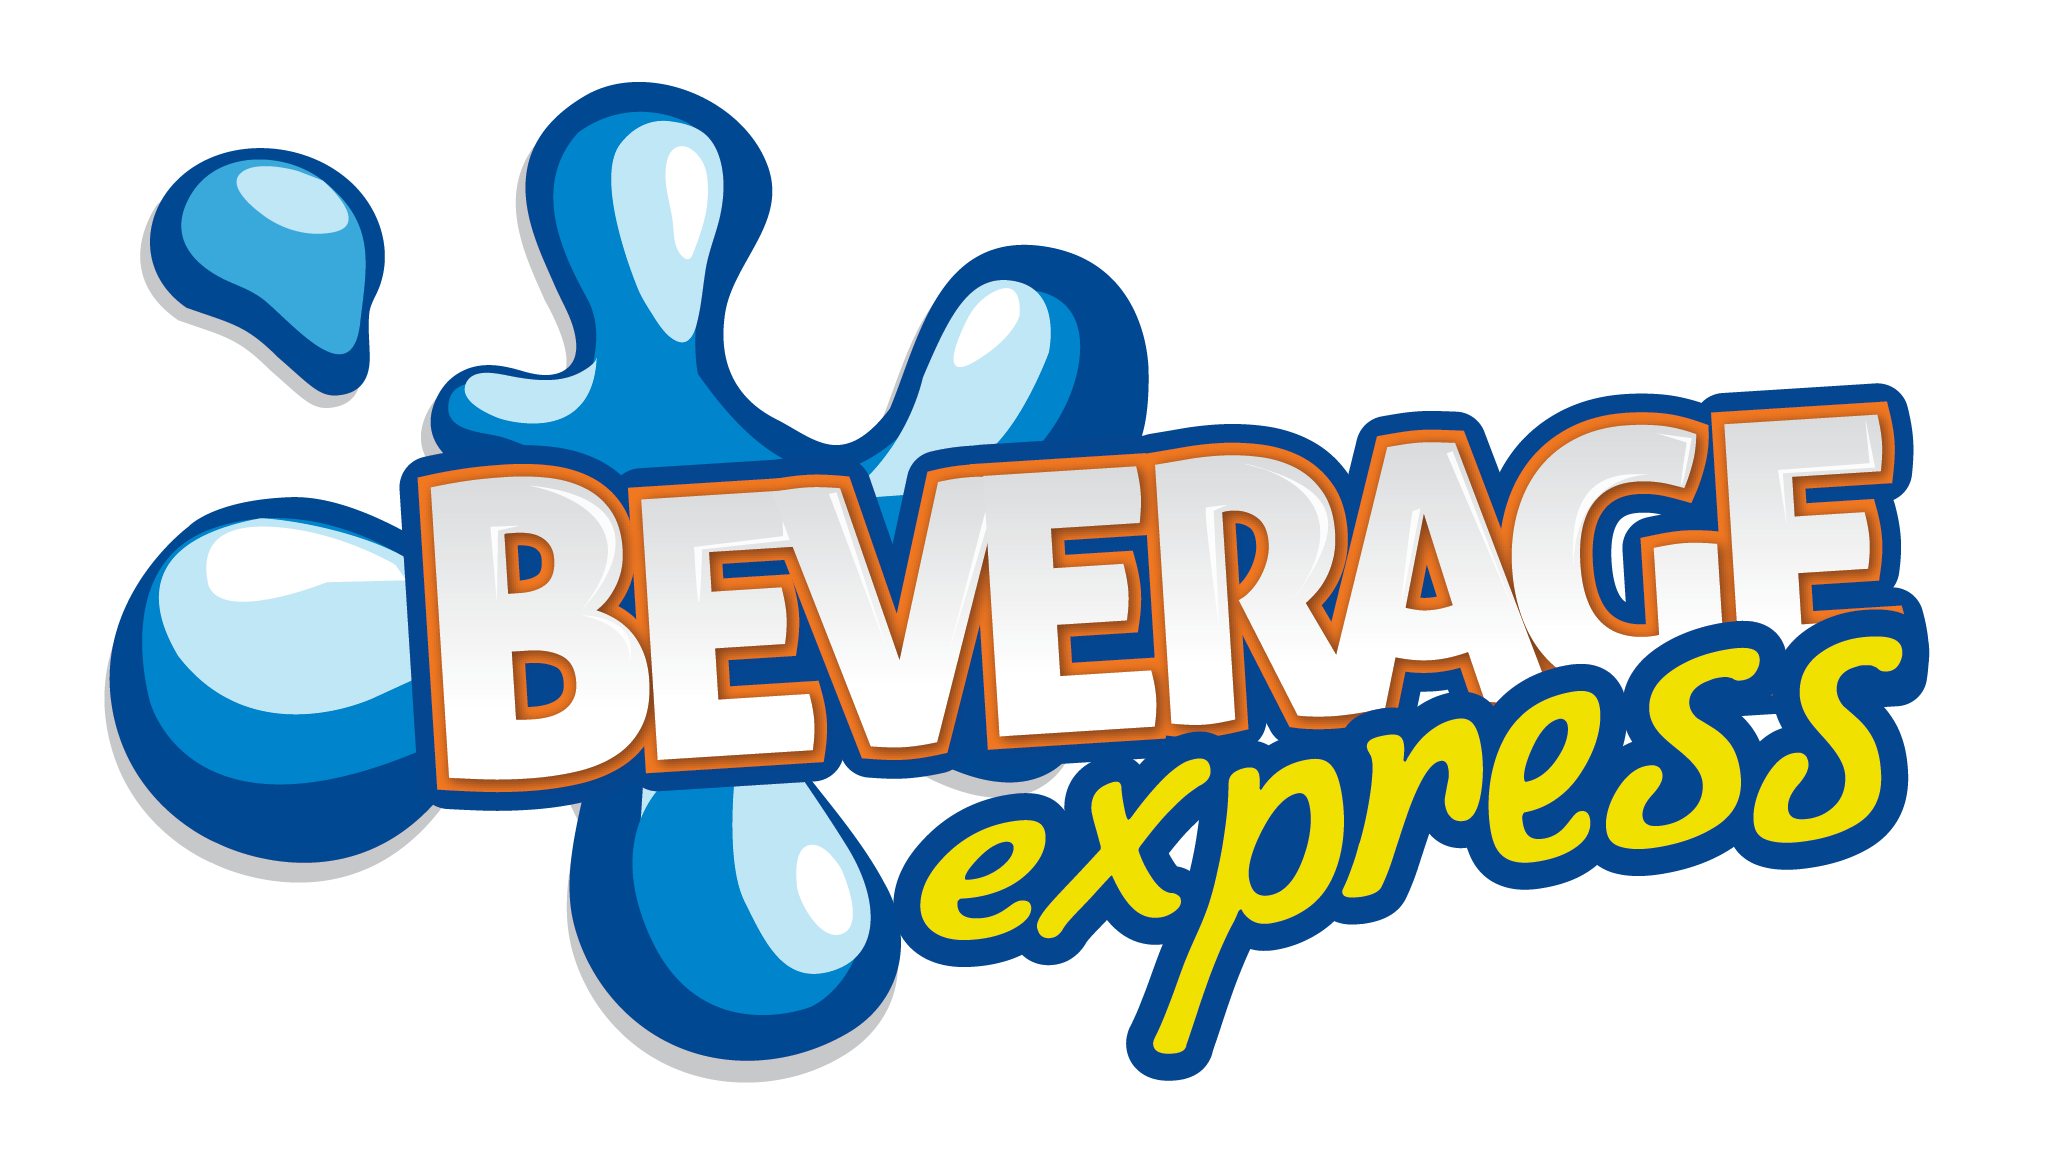 Beverage Express